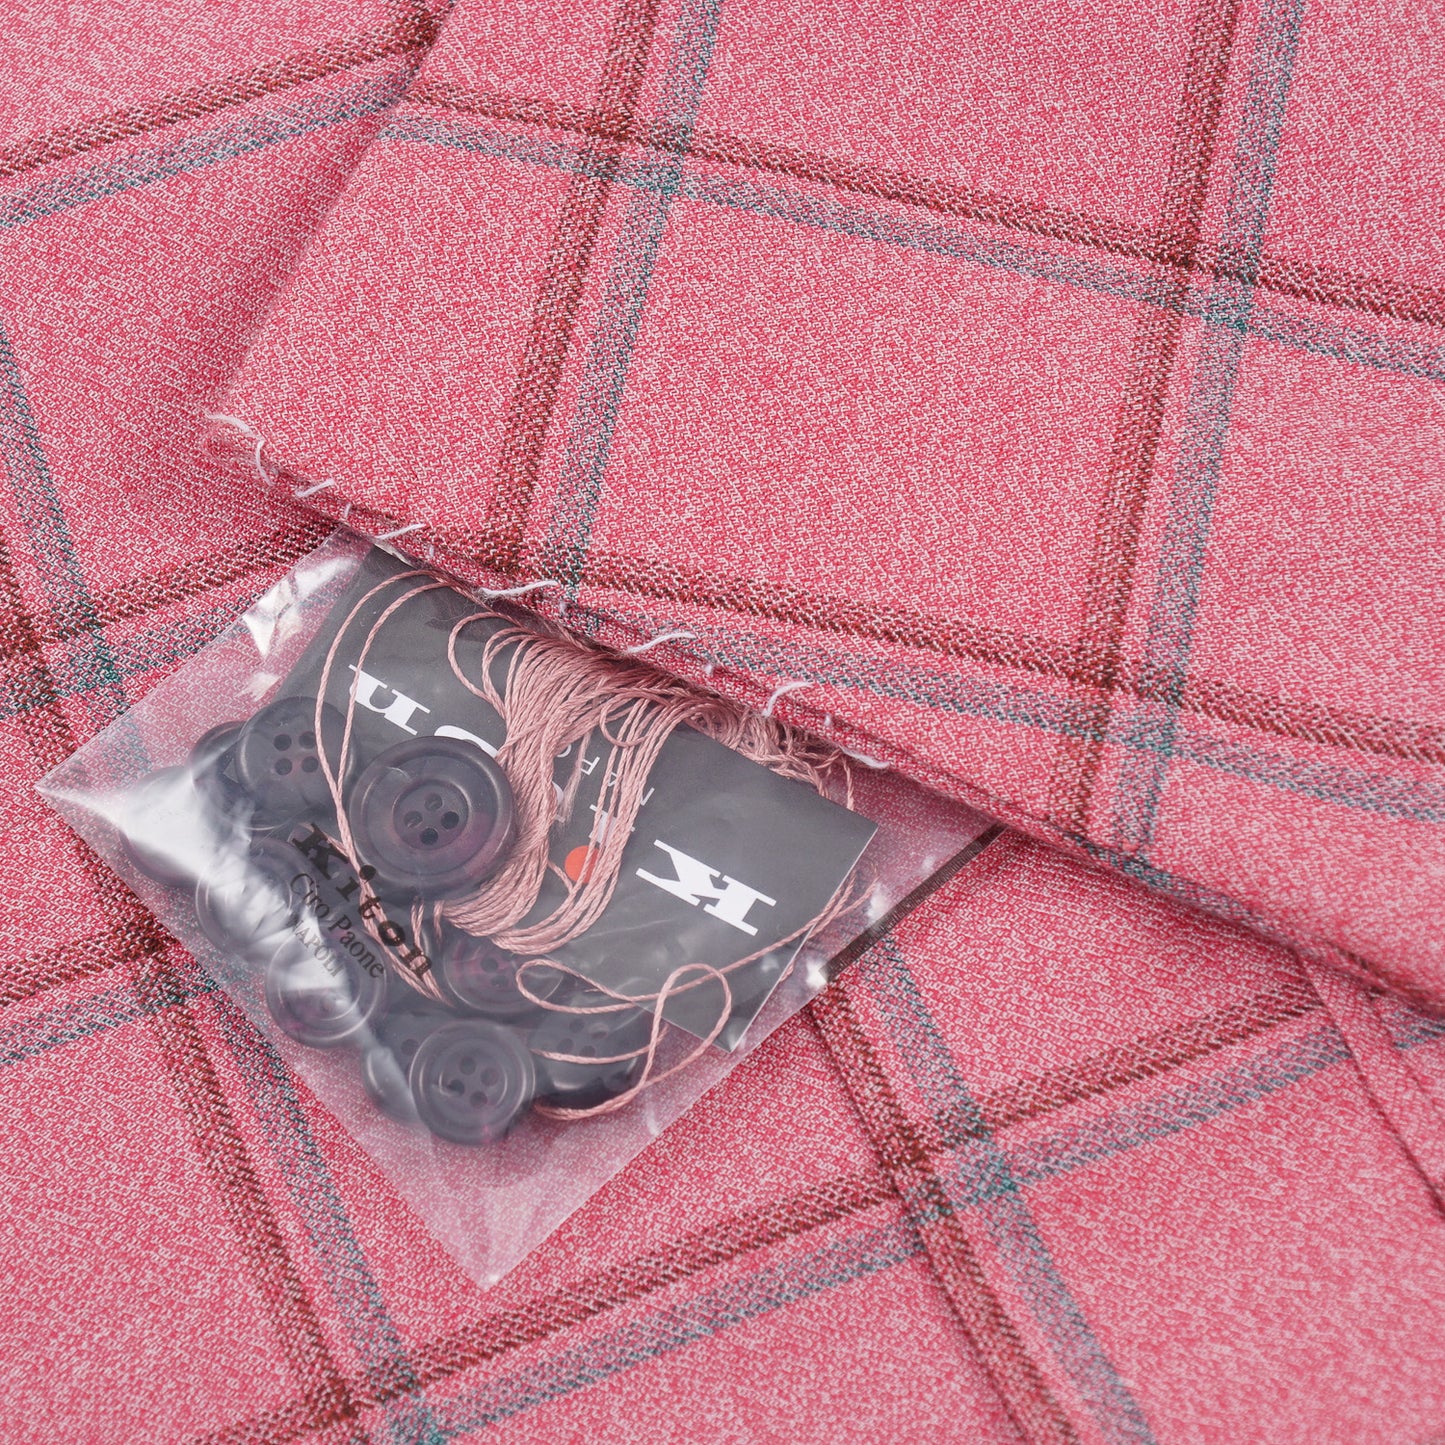 Kiton Pink Check Cashmere Sport Coat - Top Shelf Apparel